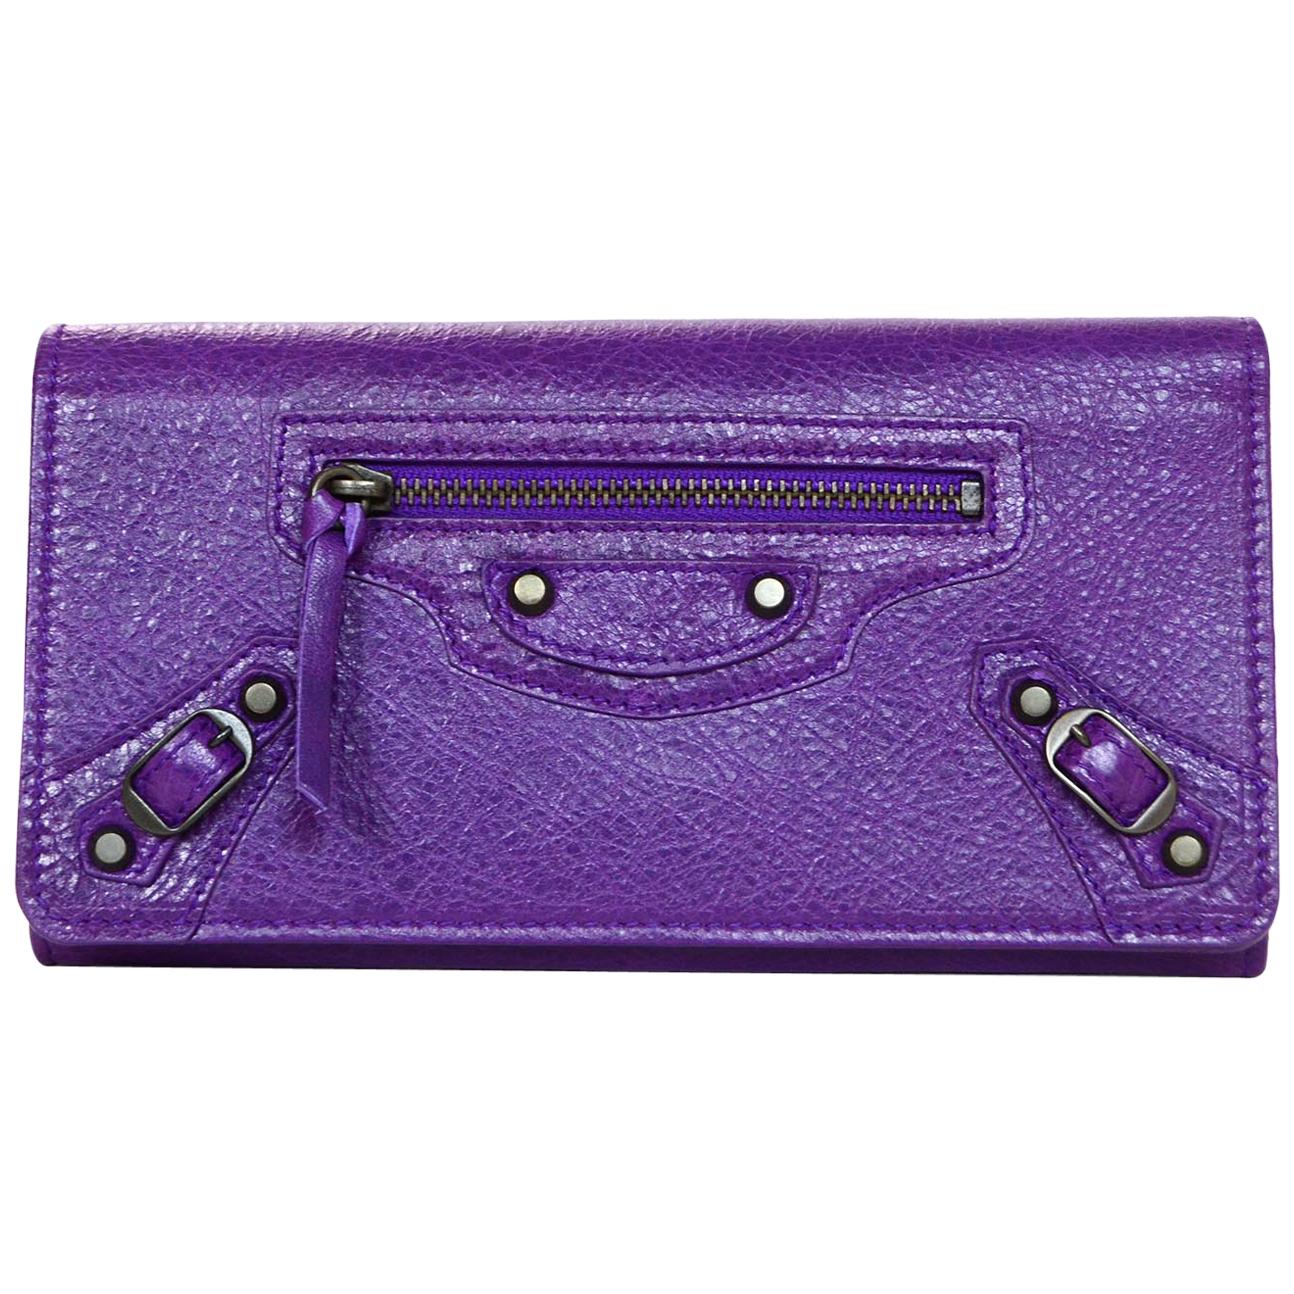 Balenciaga Purple Leather Classic Wallet W/ Brass Hardware & Dust Bag